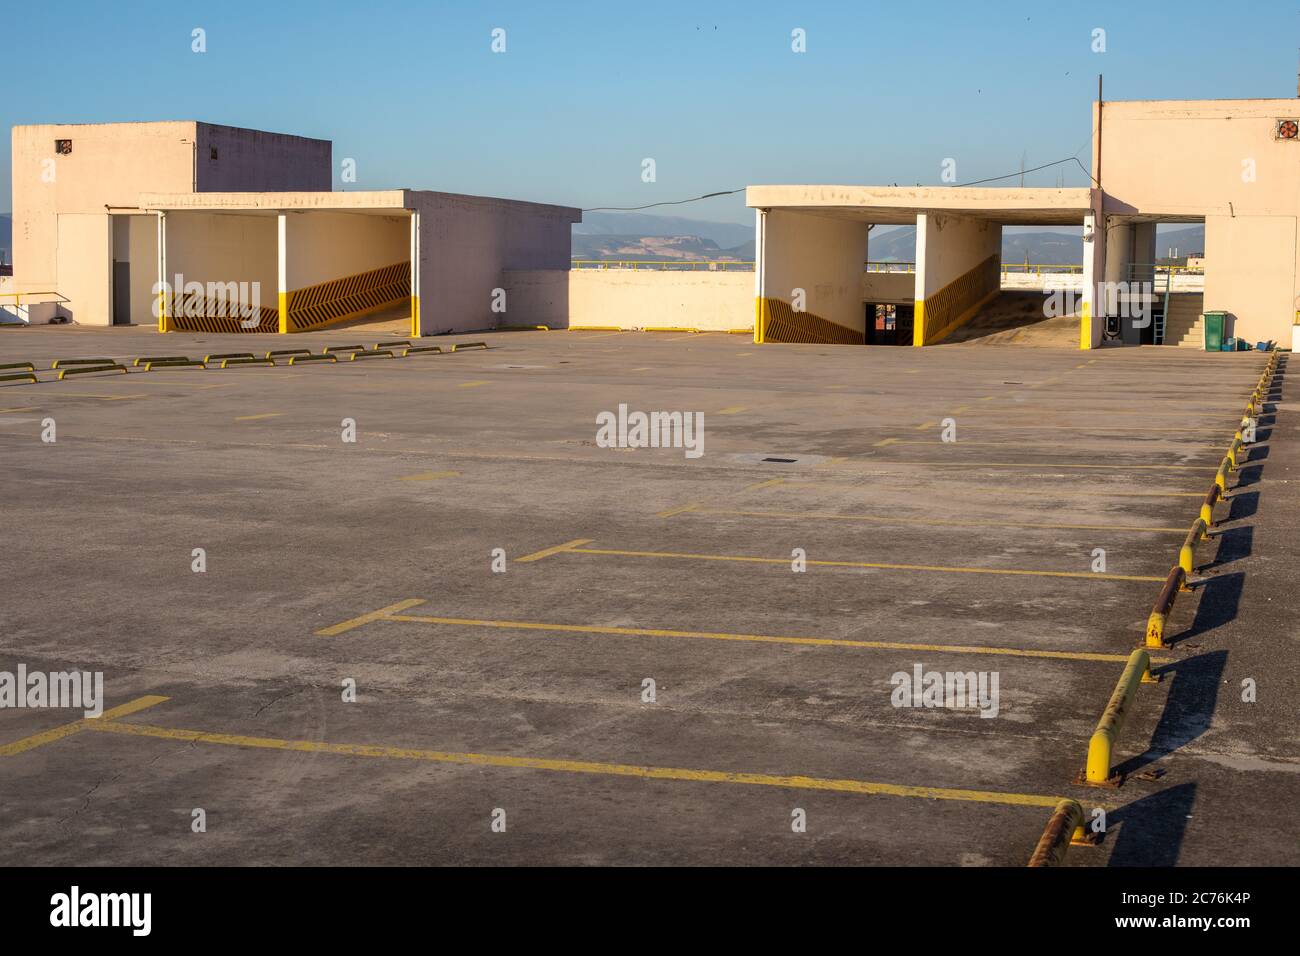 Empty open area parking on a multi-storey car parking area Stock Photo